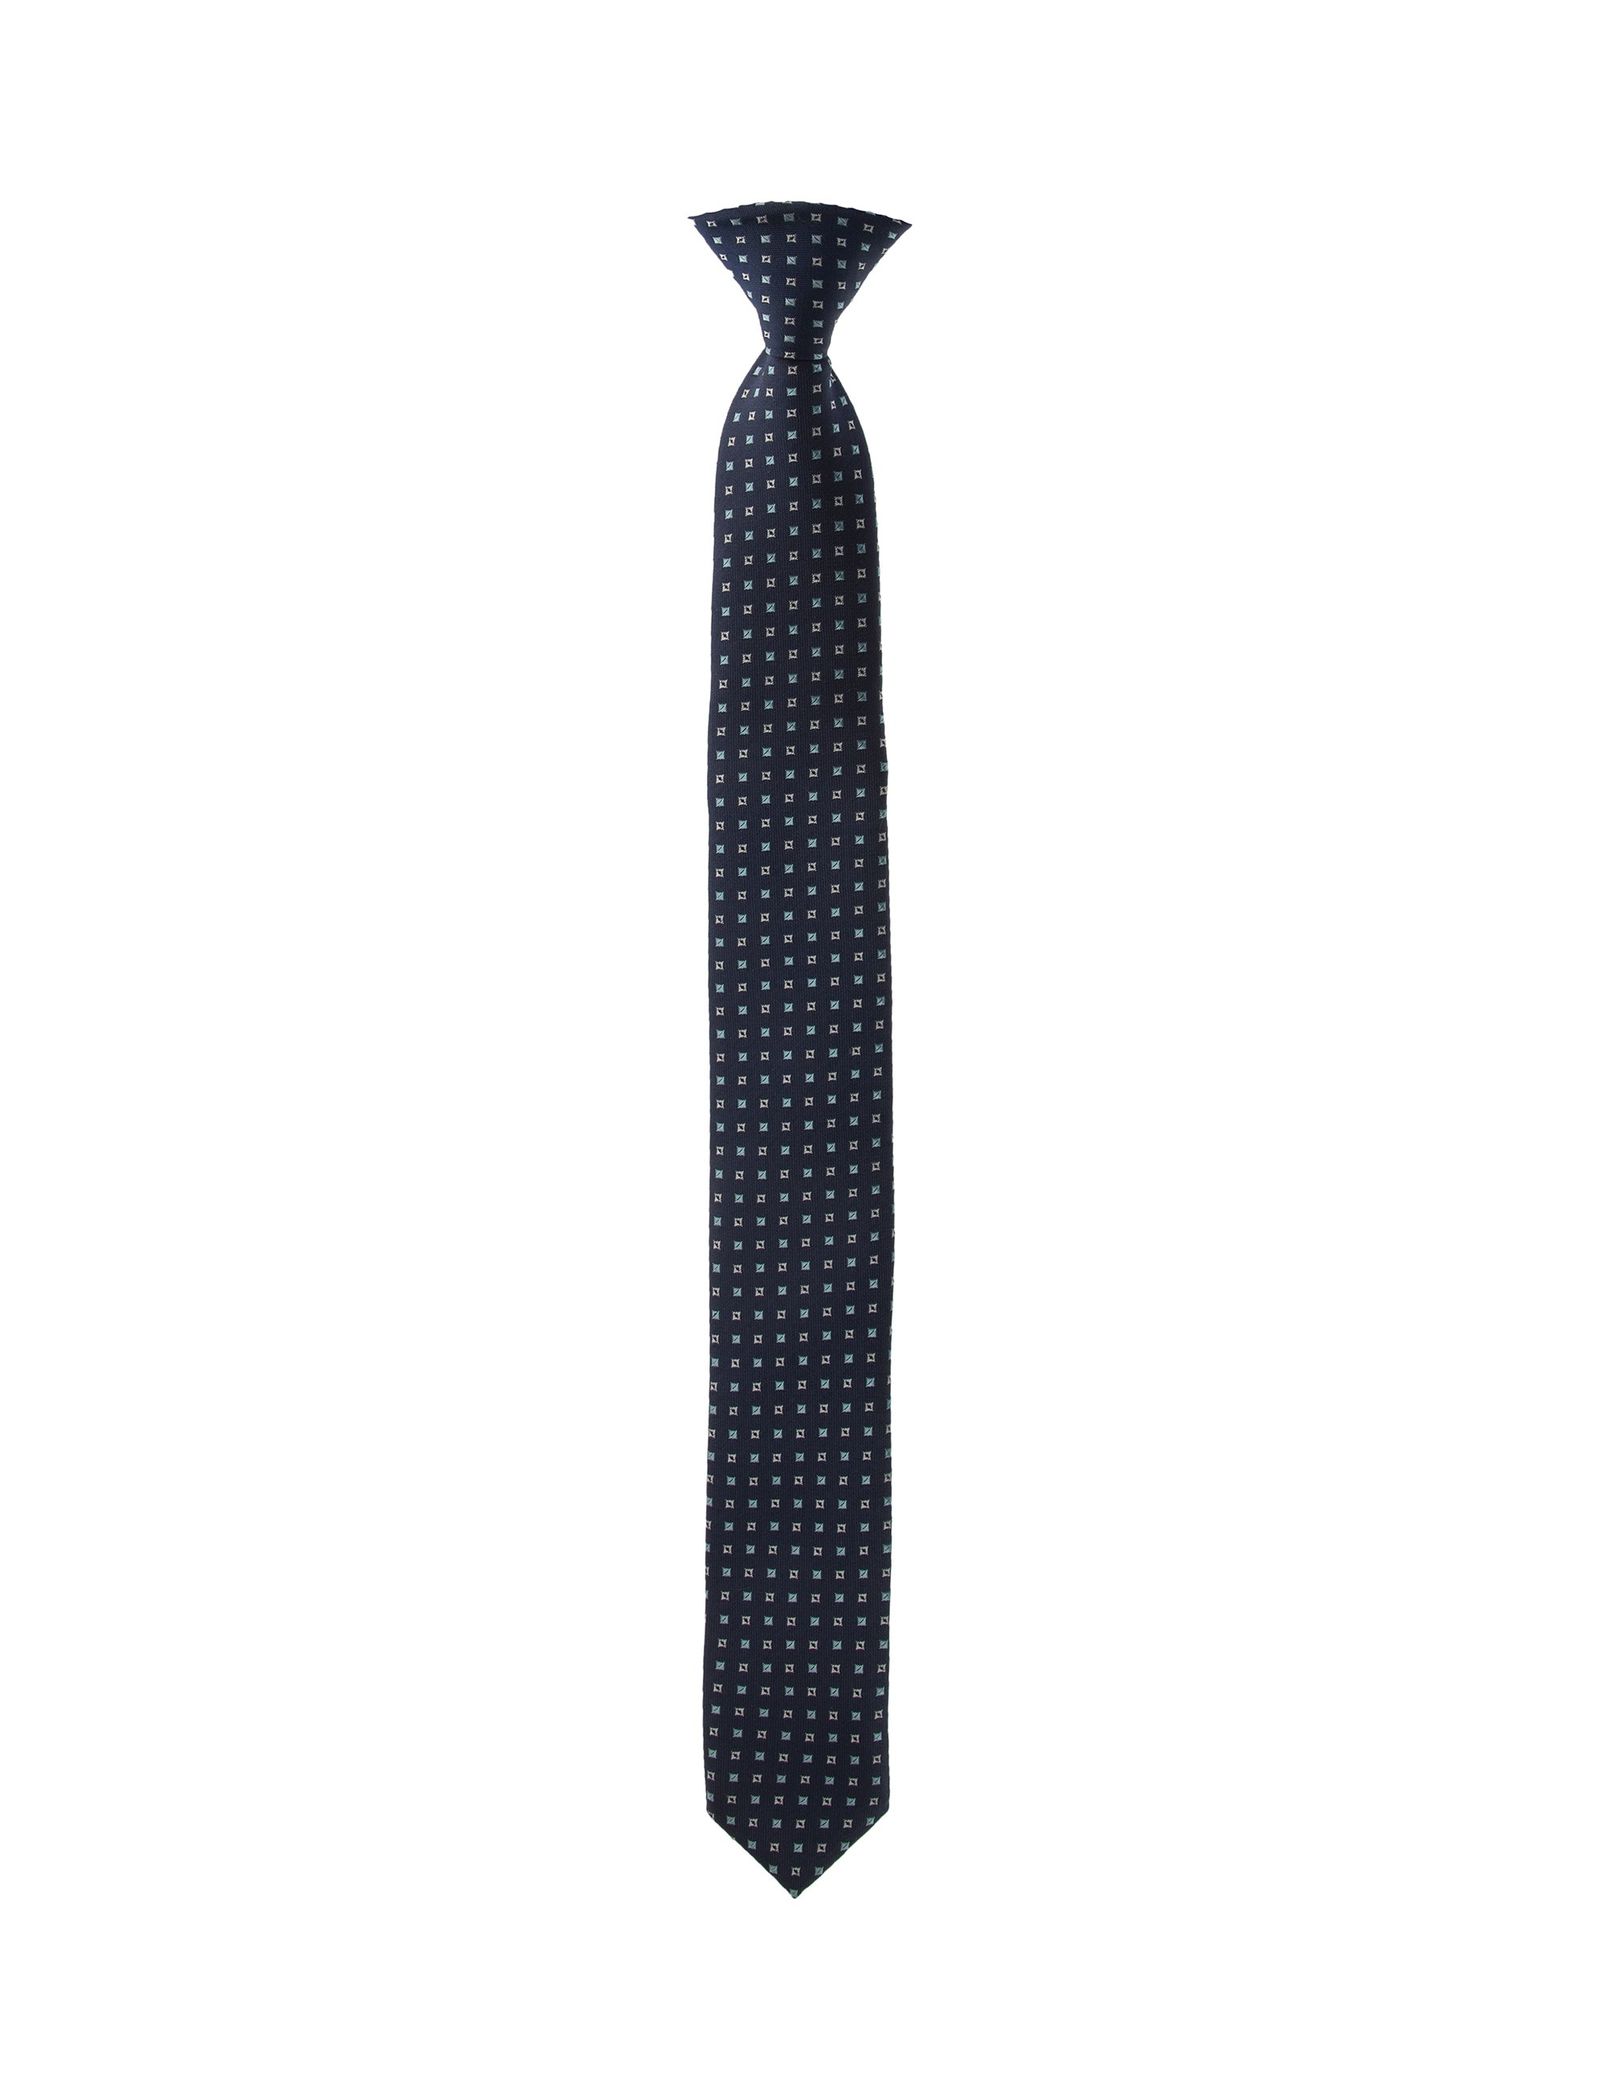 کراوات طرح دار پسرانه - بلوکیدز تک سایز - آبي - 2